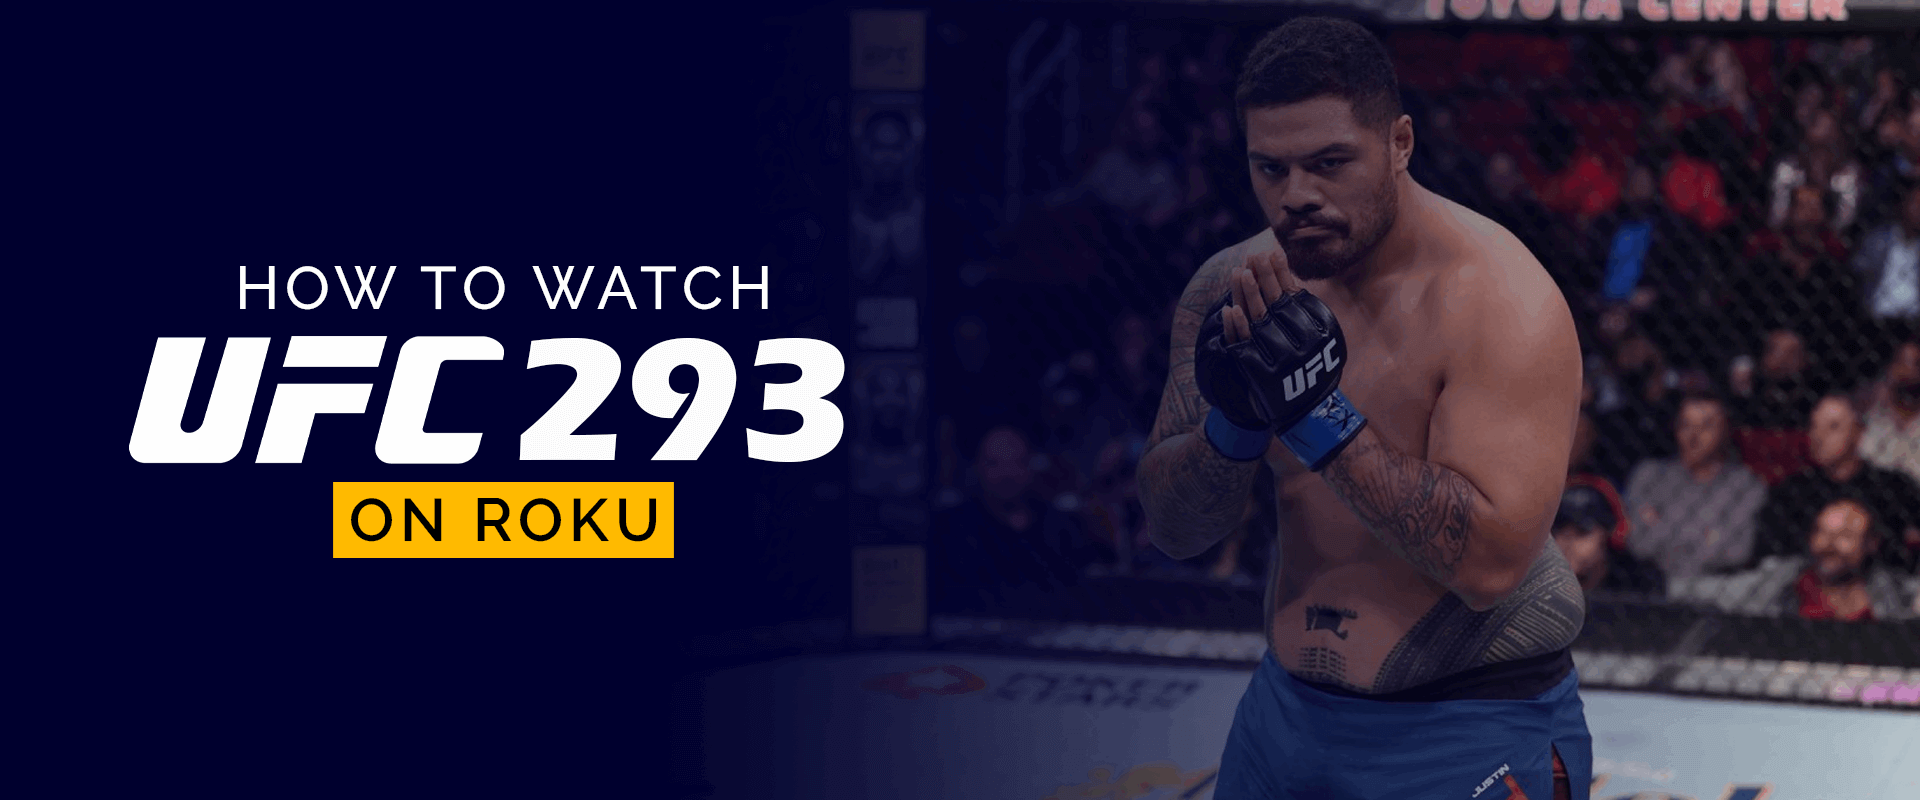 How to Watch UFC 293 on Roku